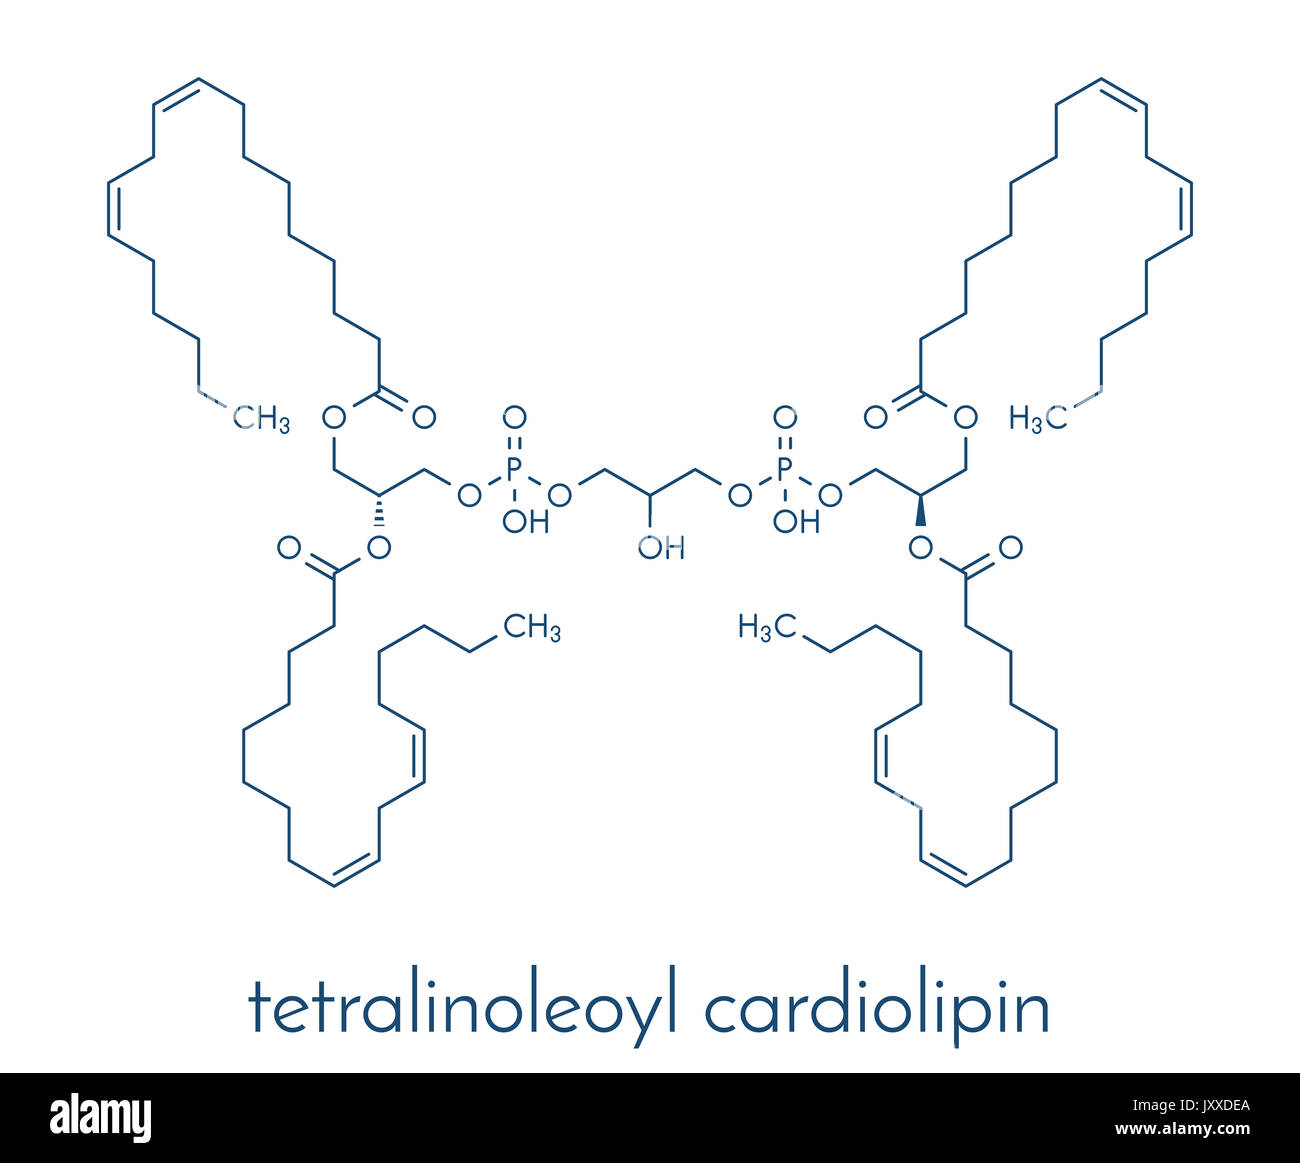 Cardiolipin (tetralinoleoyl cardiolipin) Molekül. Wichtiger Bestandteil der inneren Membran der Mitochondrien. Skelettmuskulatur Formel. Stockfoto